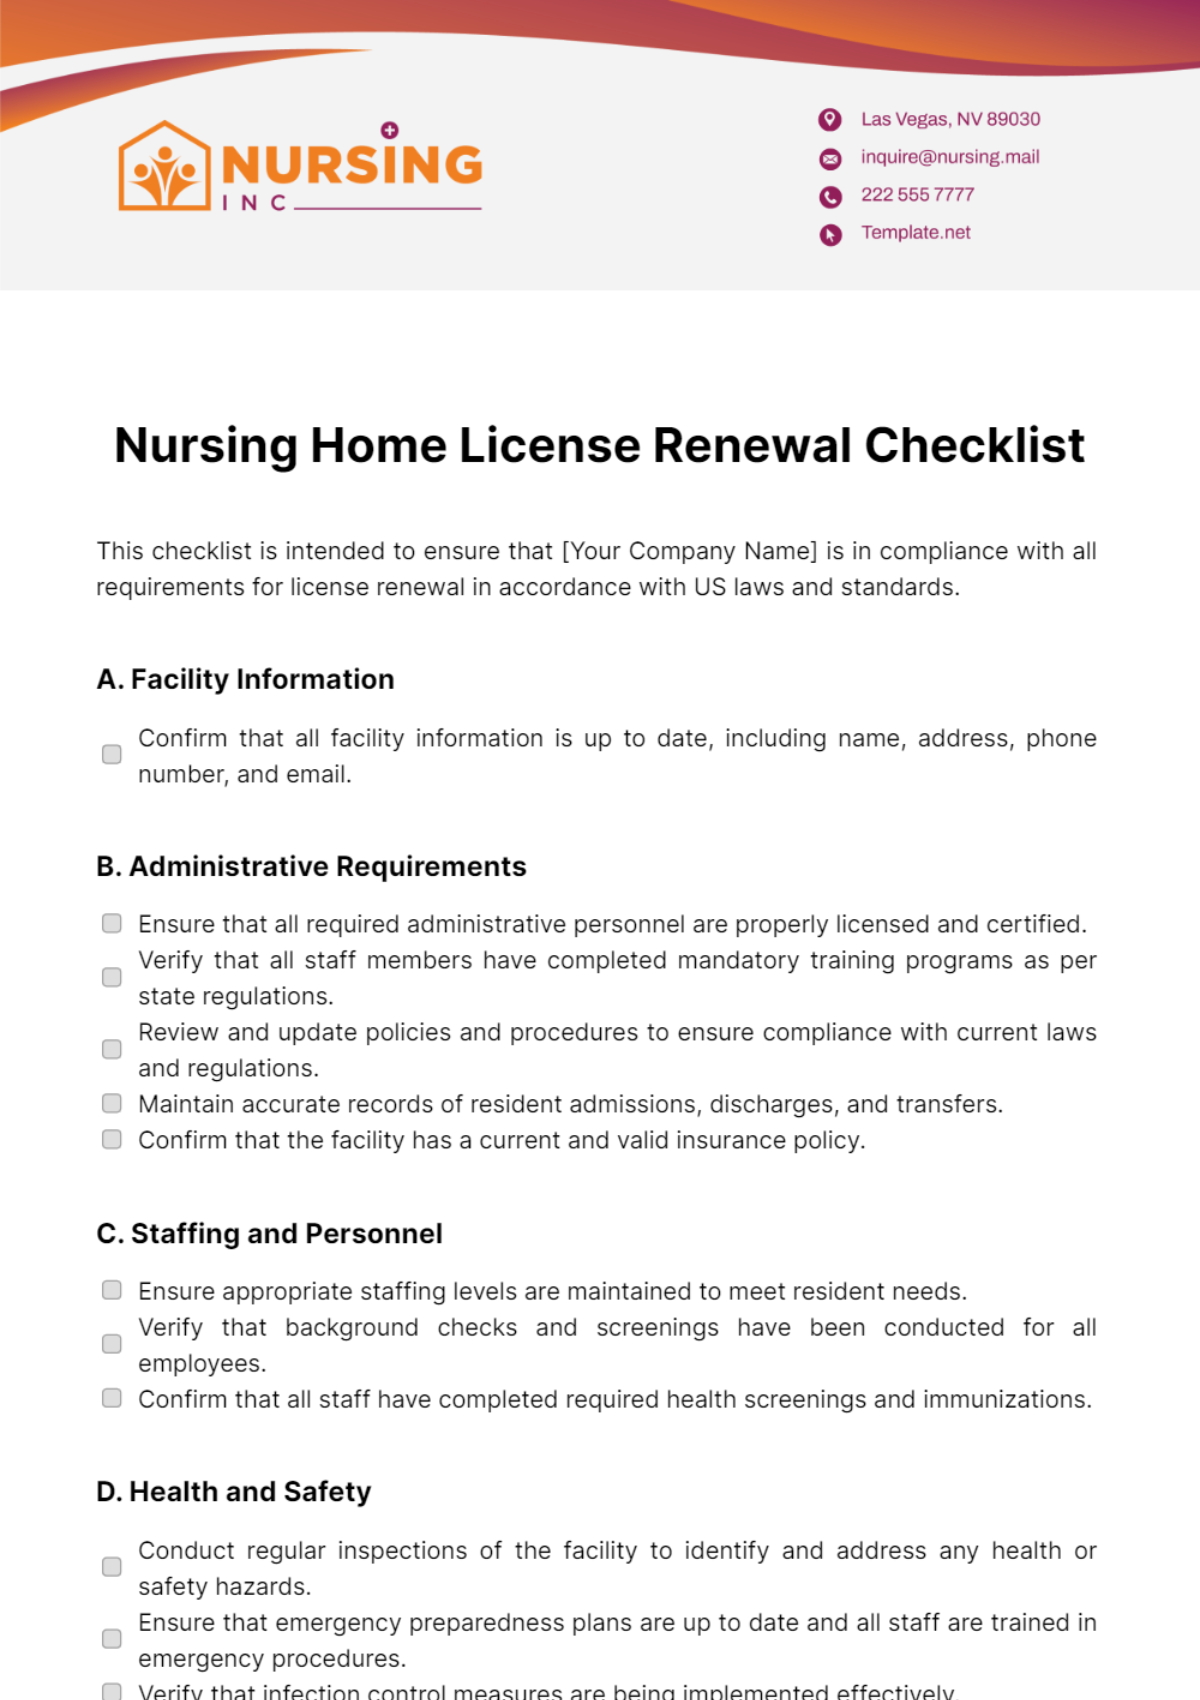 Nursing Home License Renewal Checklist Template